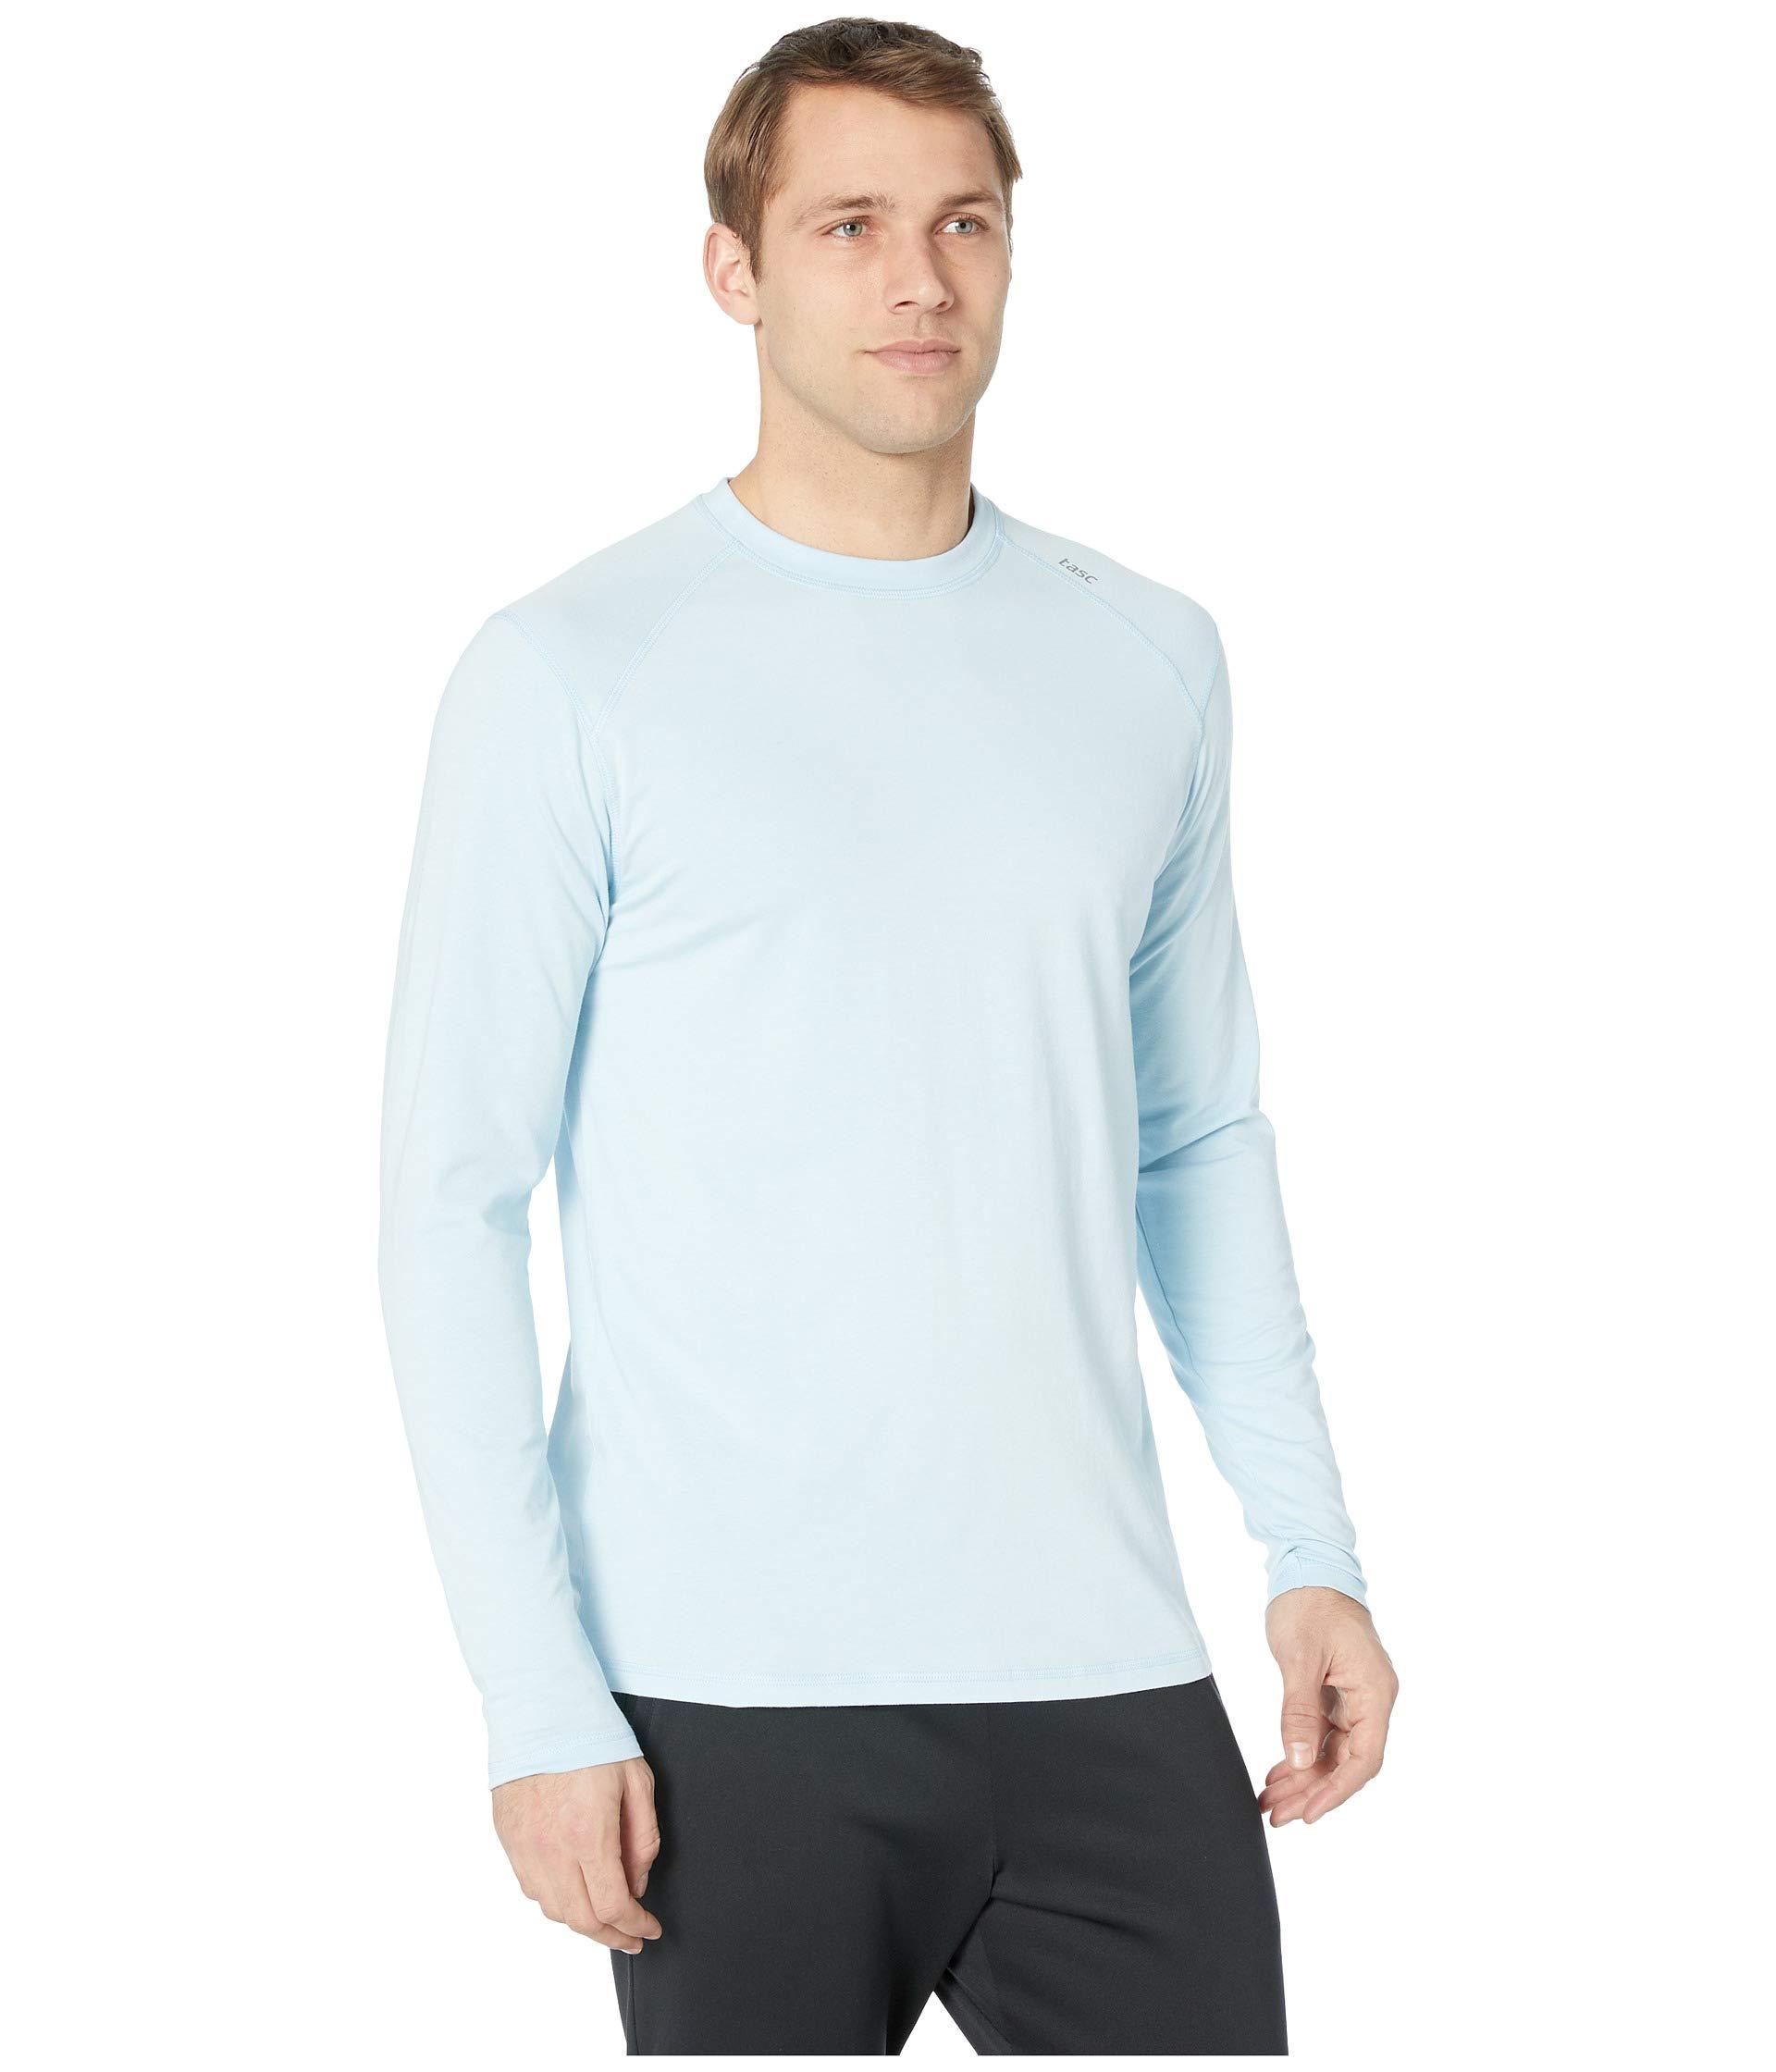 tasc Performance Cotton Carrollton Long Sleeve Shirt in Cool Blue (Blue ...